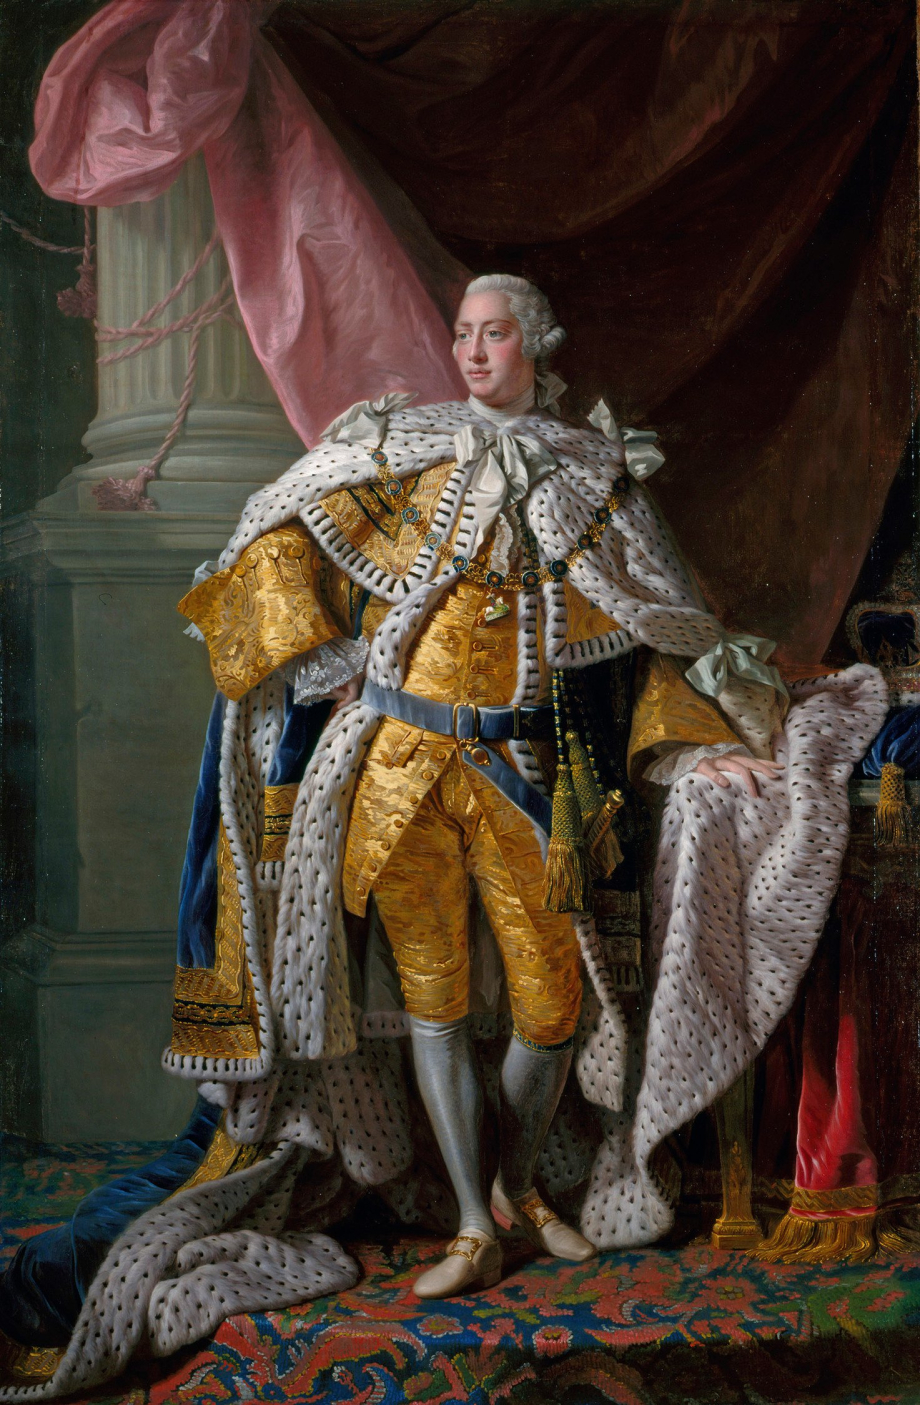 The Coronation portrait of King George III